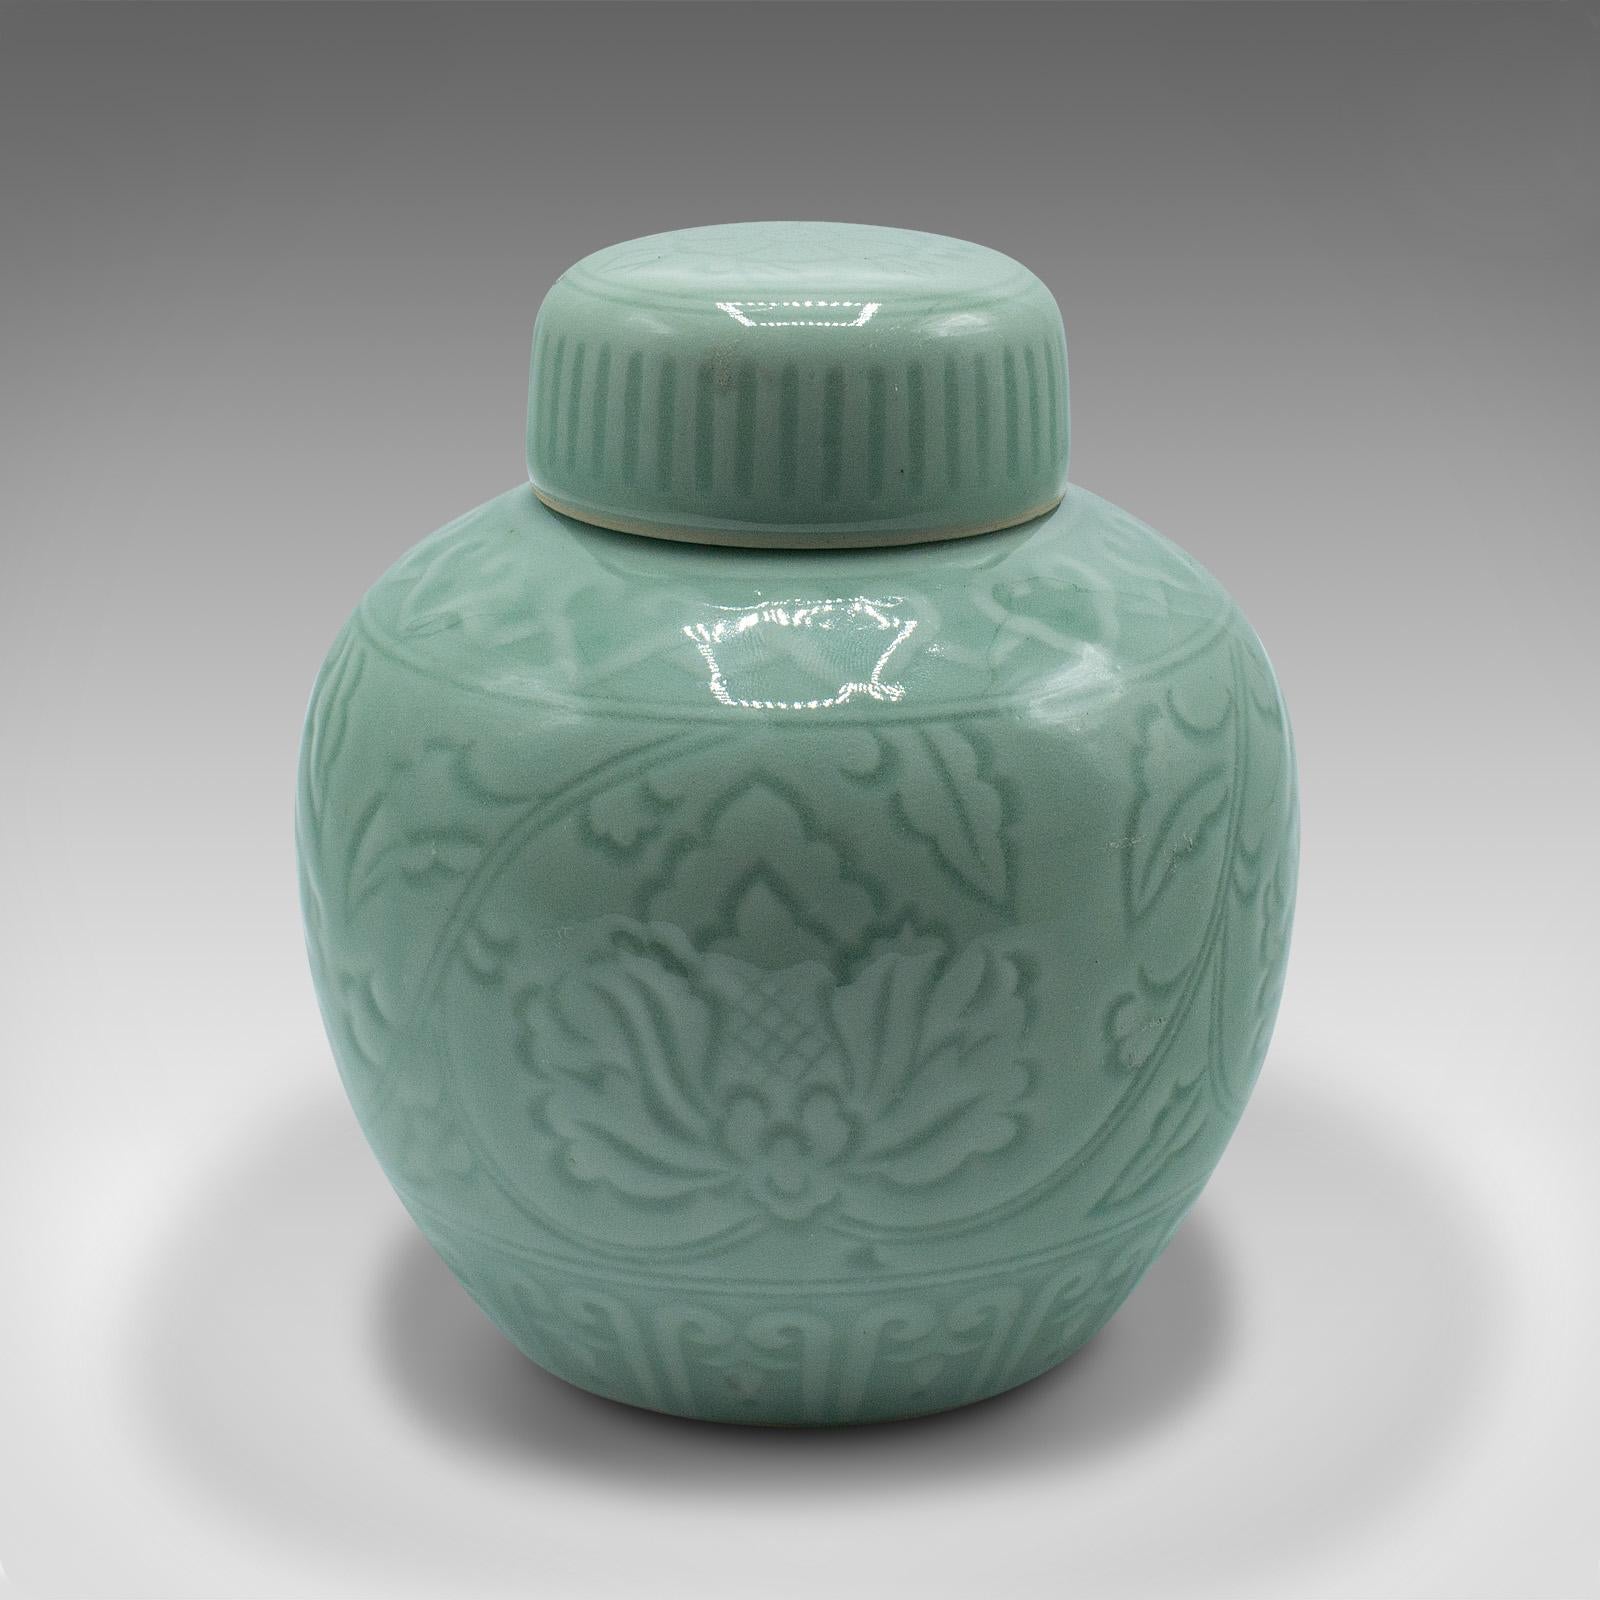 19th Century Pair Of Antique Decorative Spice Jars, Chinese, Celadon, Ceramic Pot, Victorian For Sale